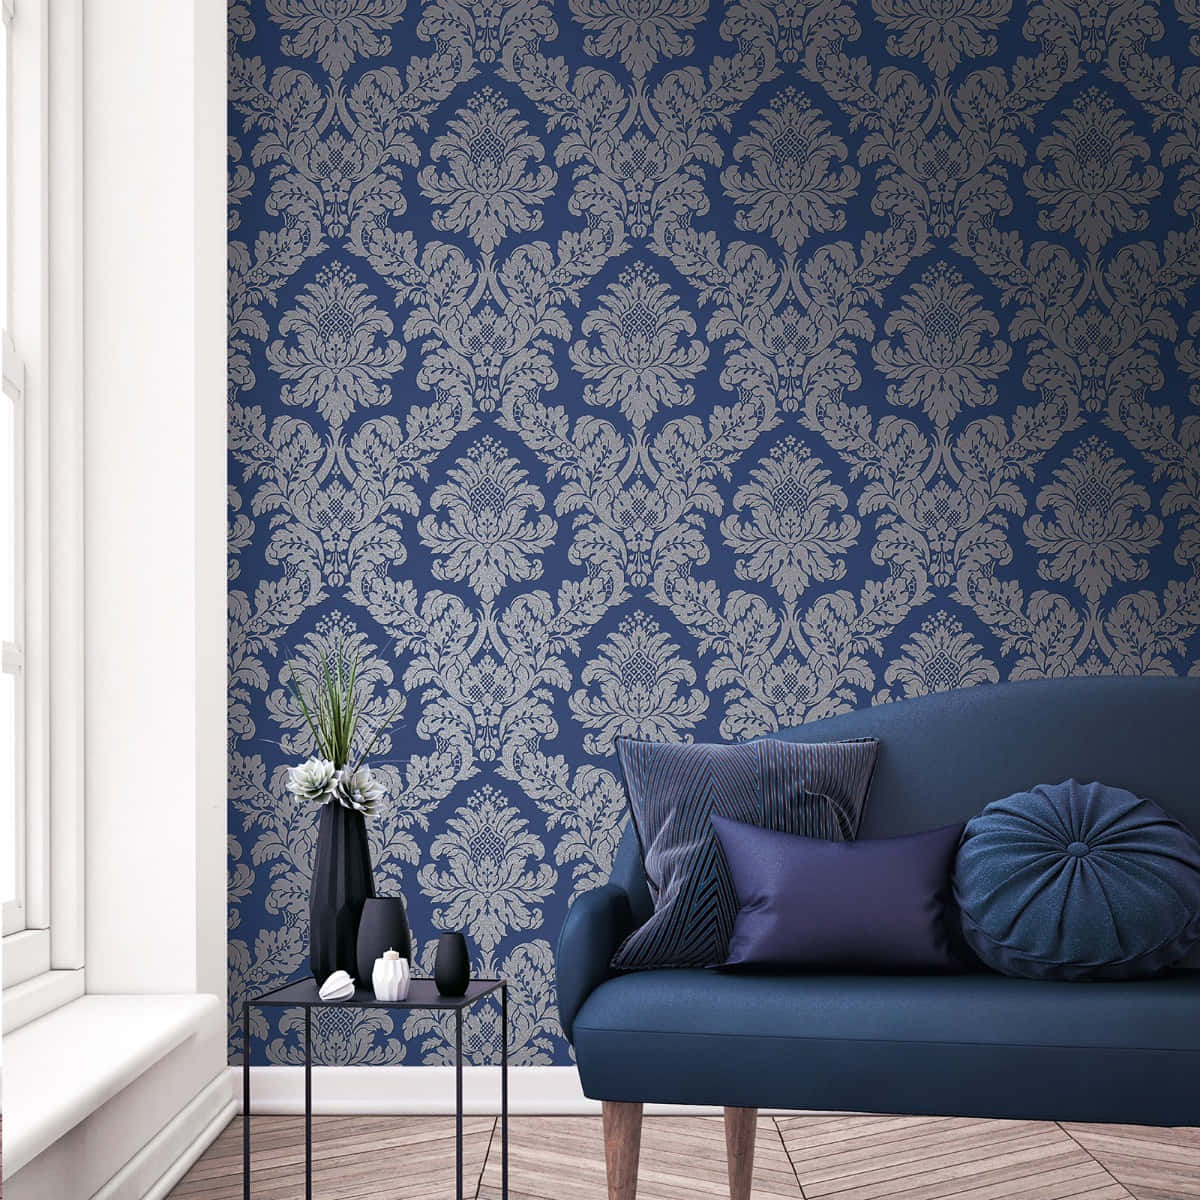 Stunning Blue and Silver Wallpaper Wallpaper